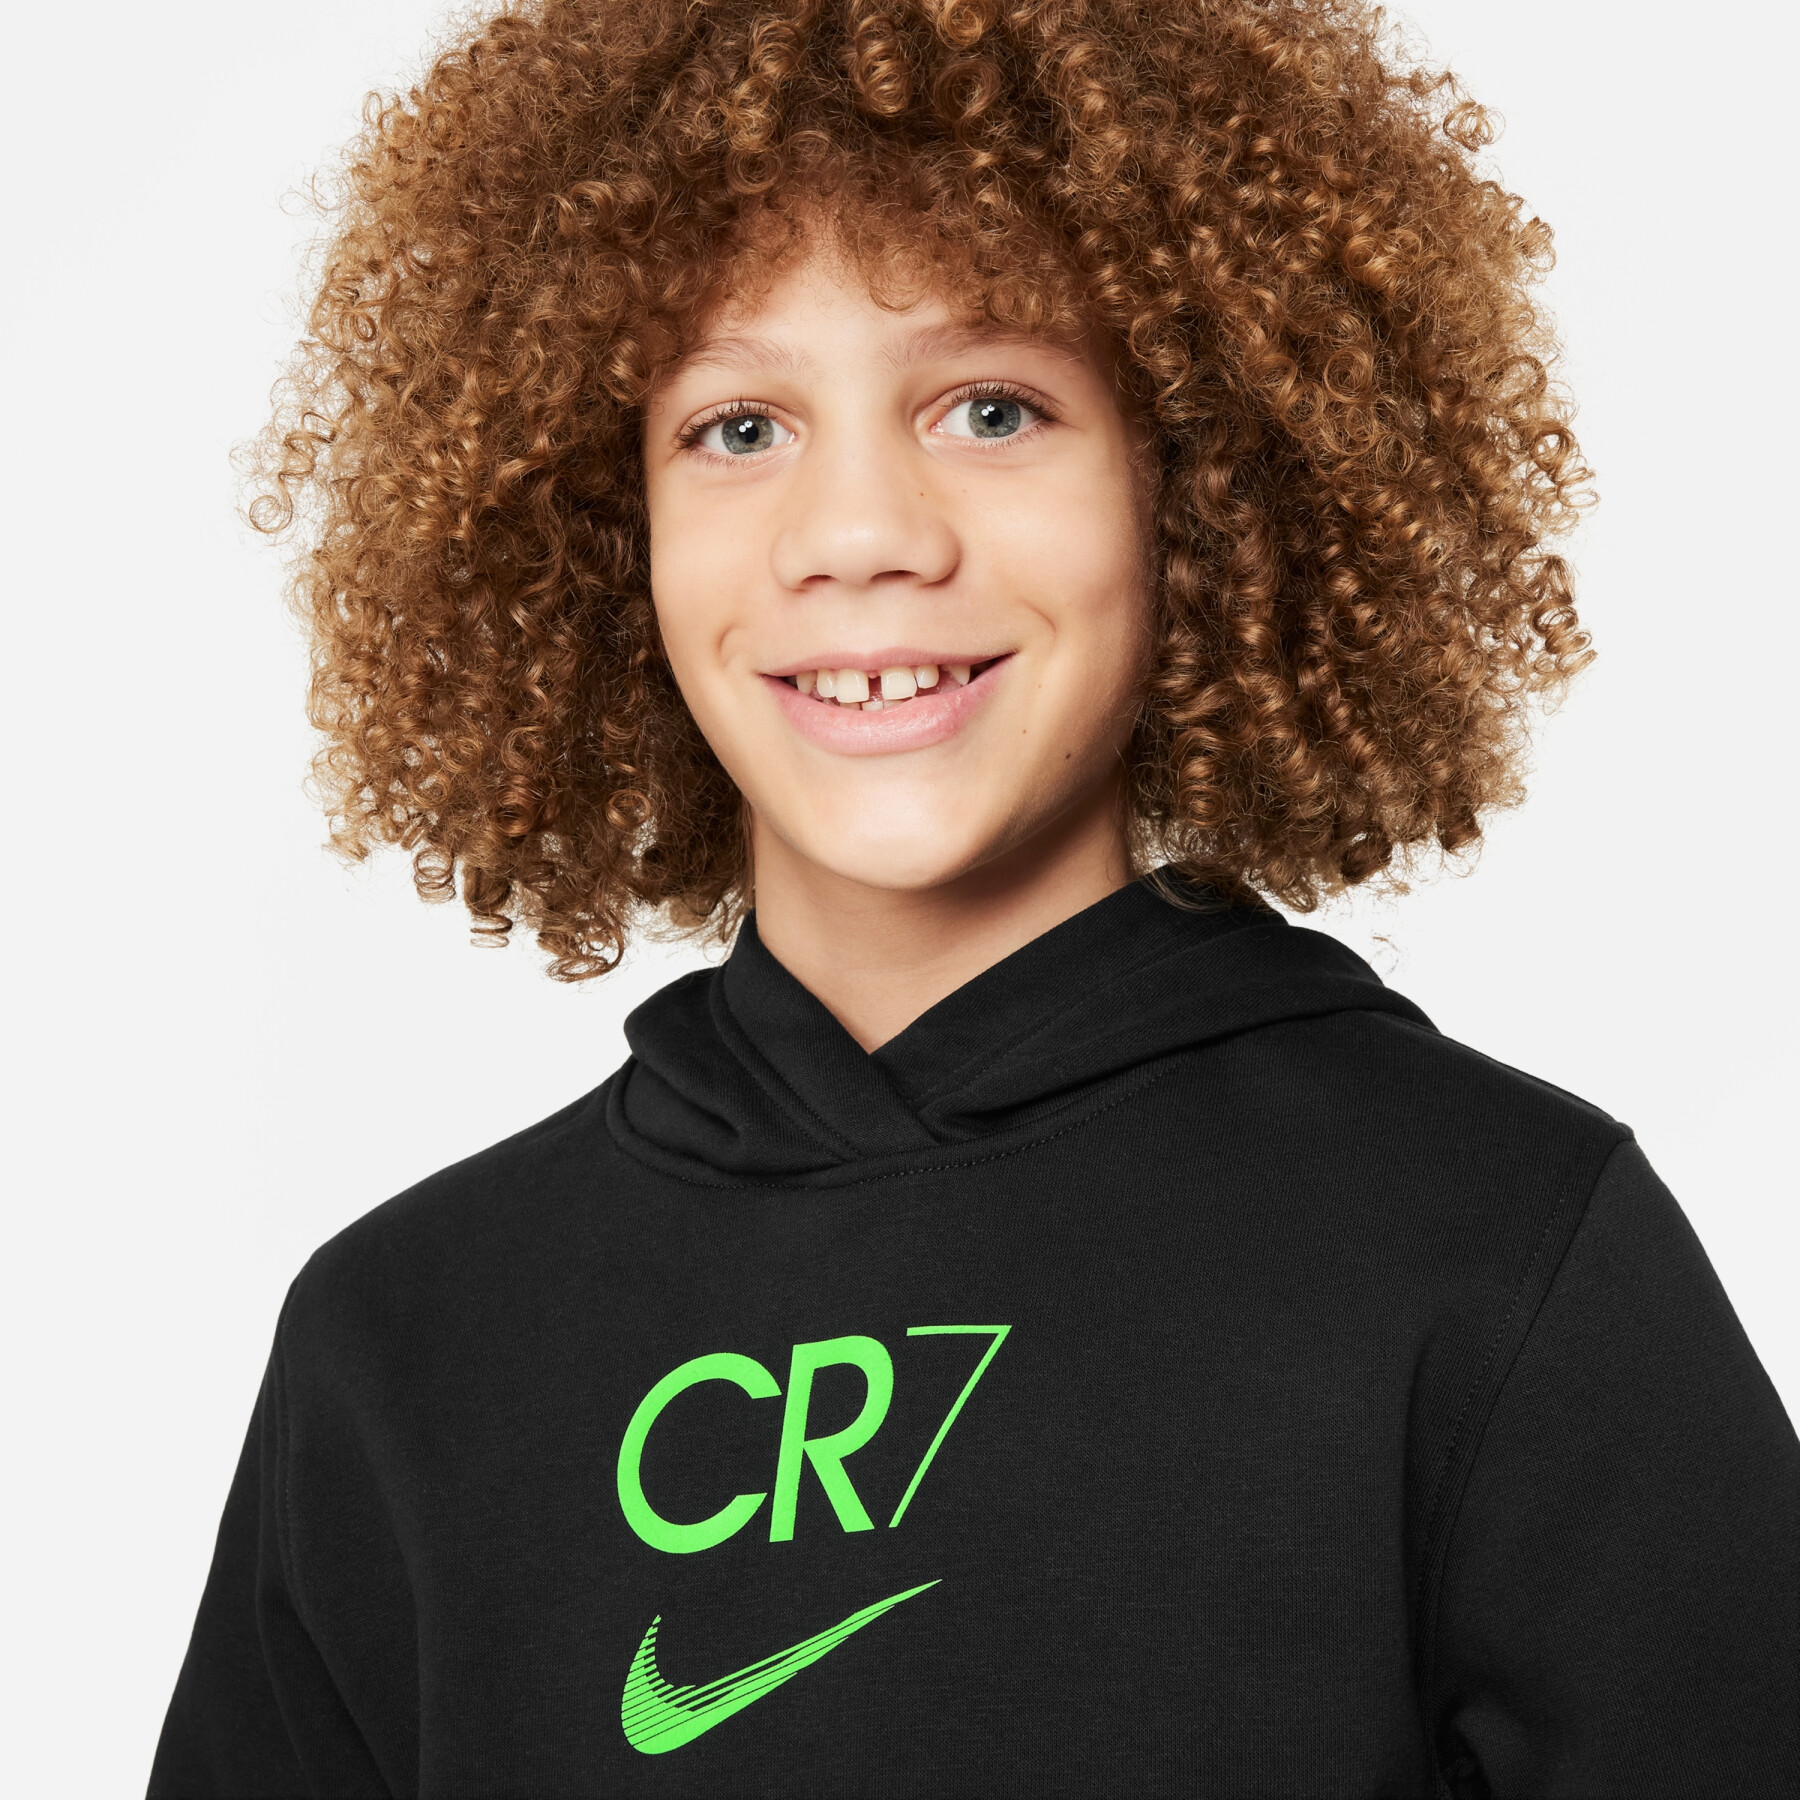 Felpa con cappuccio per bambini Nike Academy Player Edition:CR7 Club